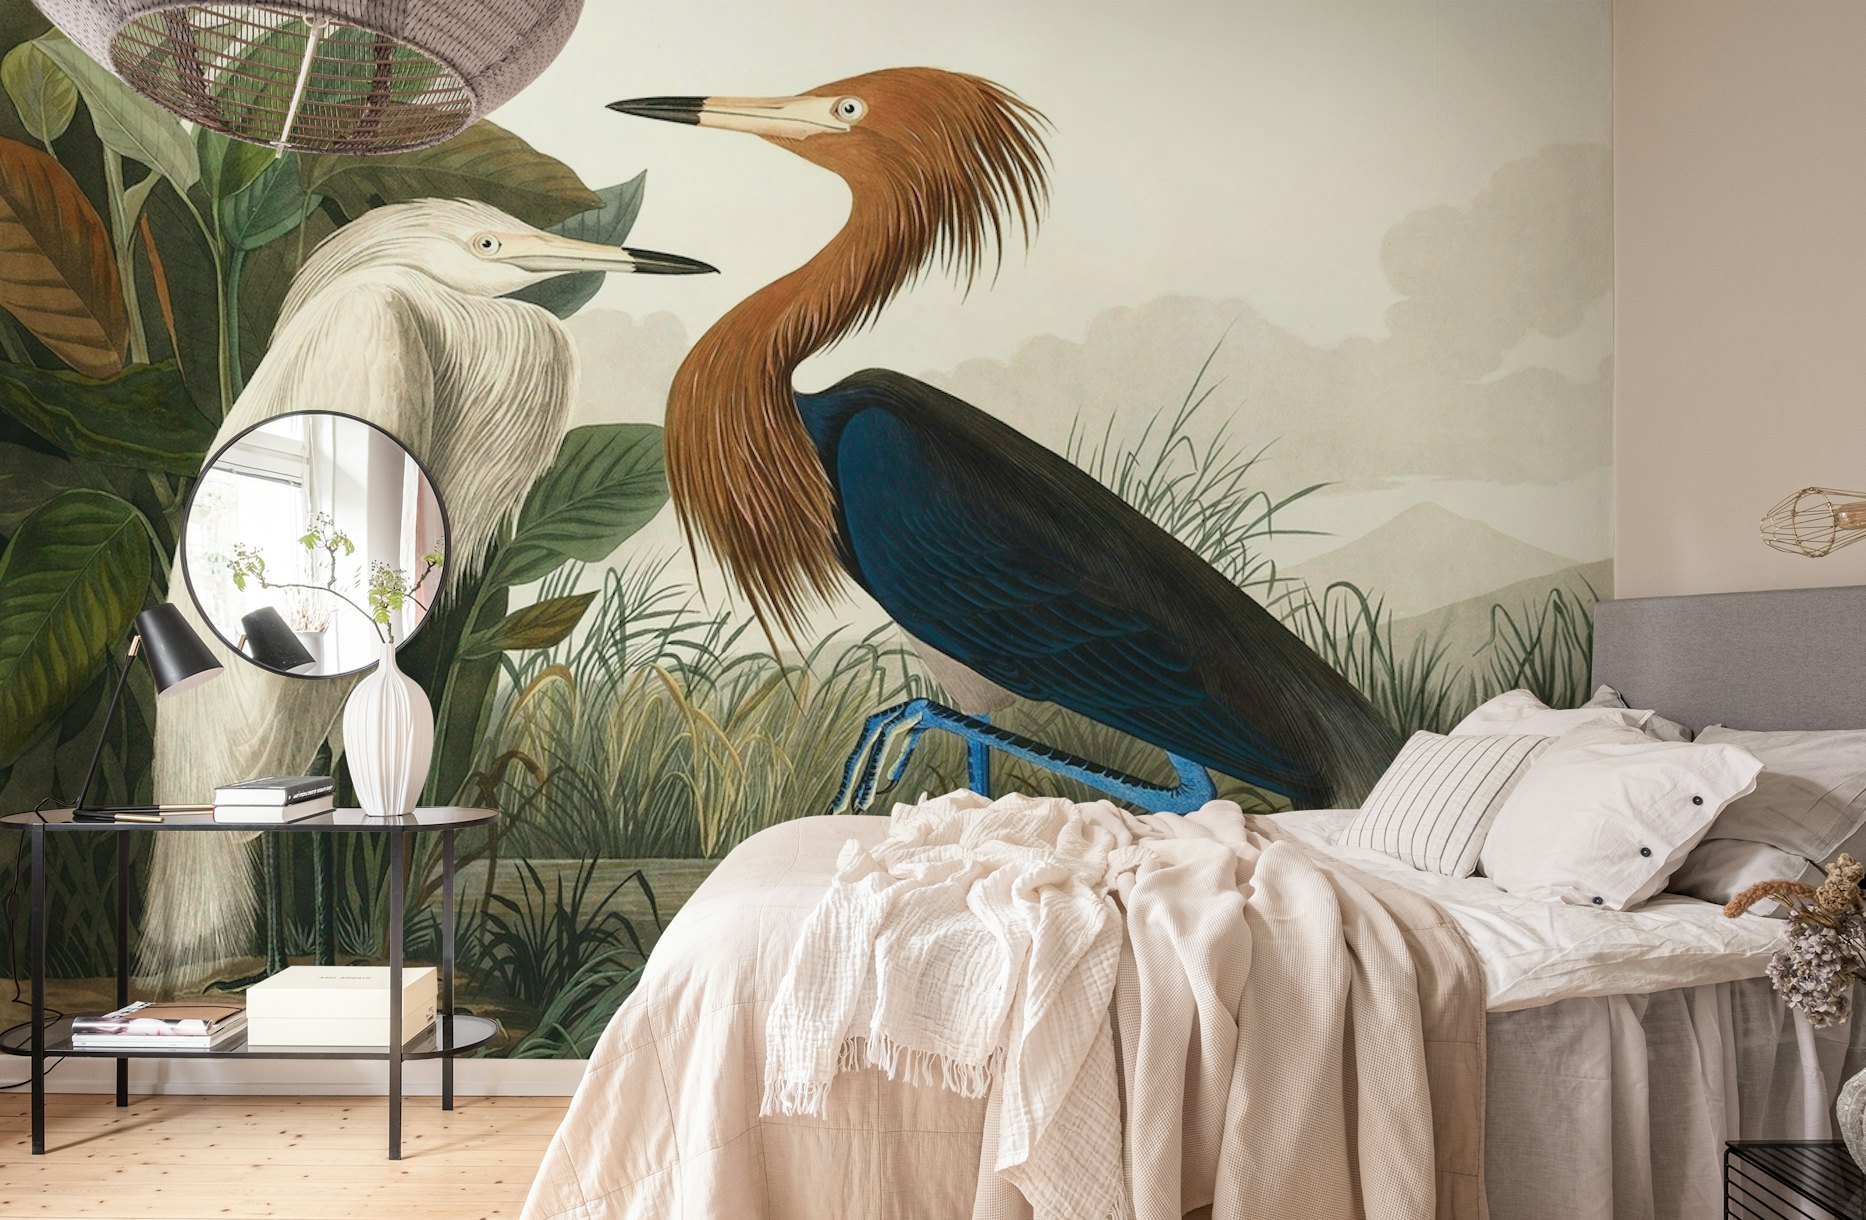 Vintage Tropical Birds wallpaper